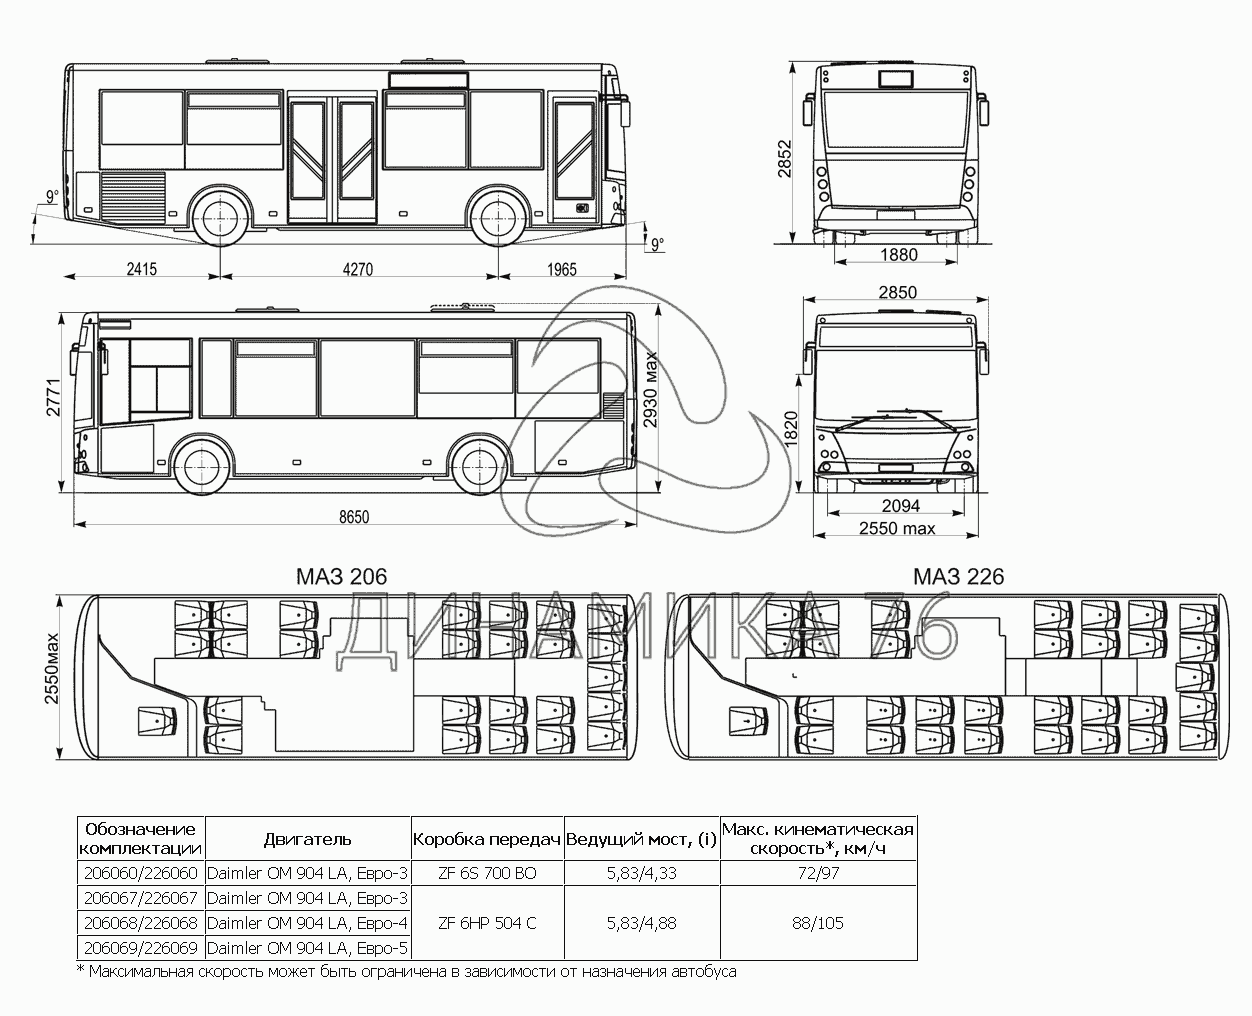 Автобусы маз-226 и маз-206 сравнение